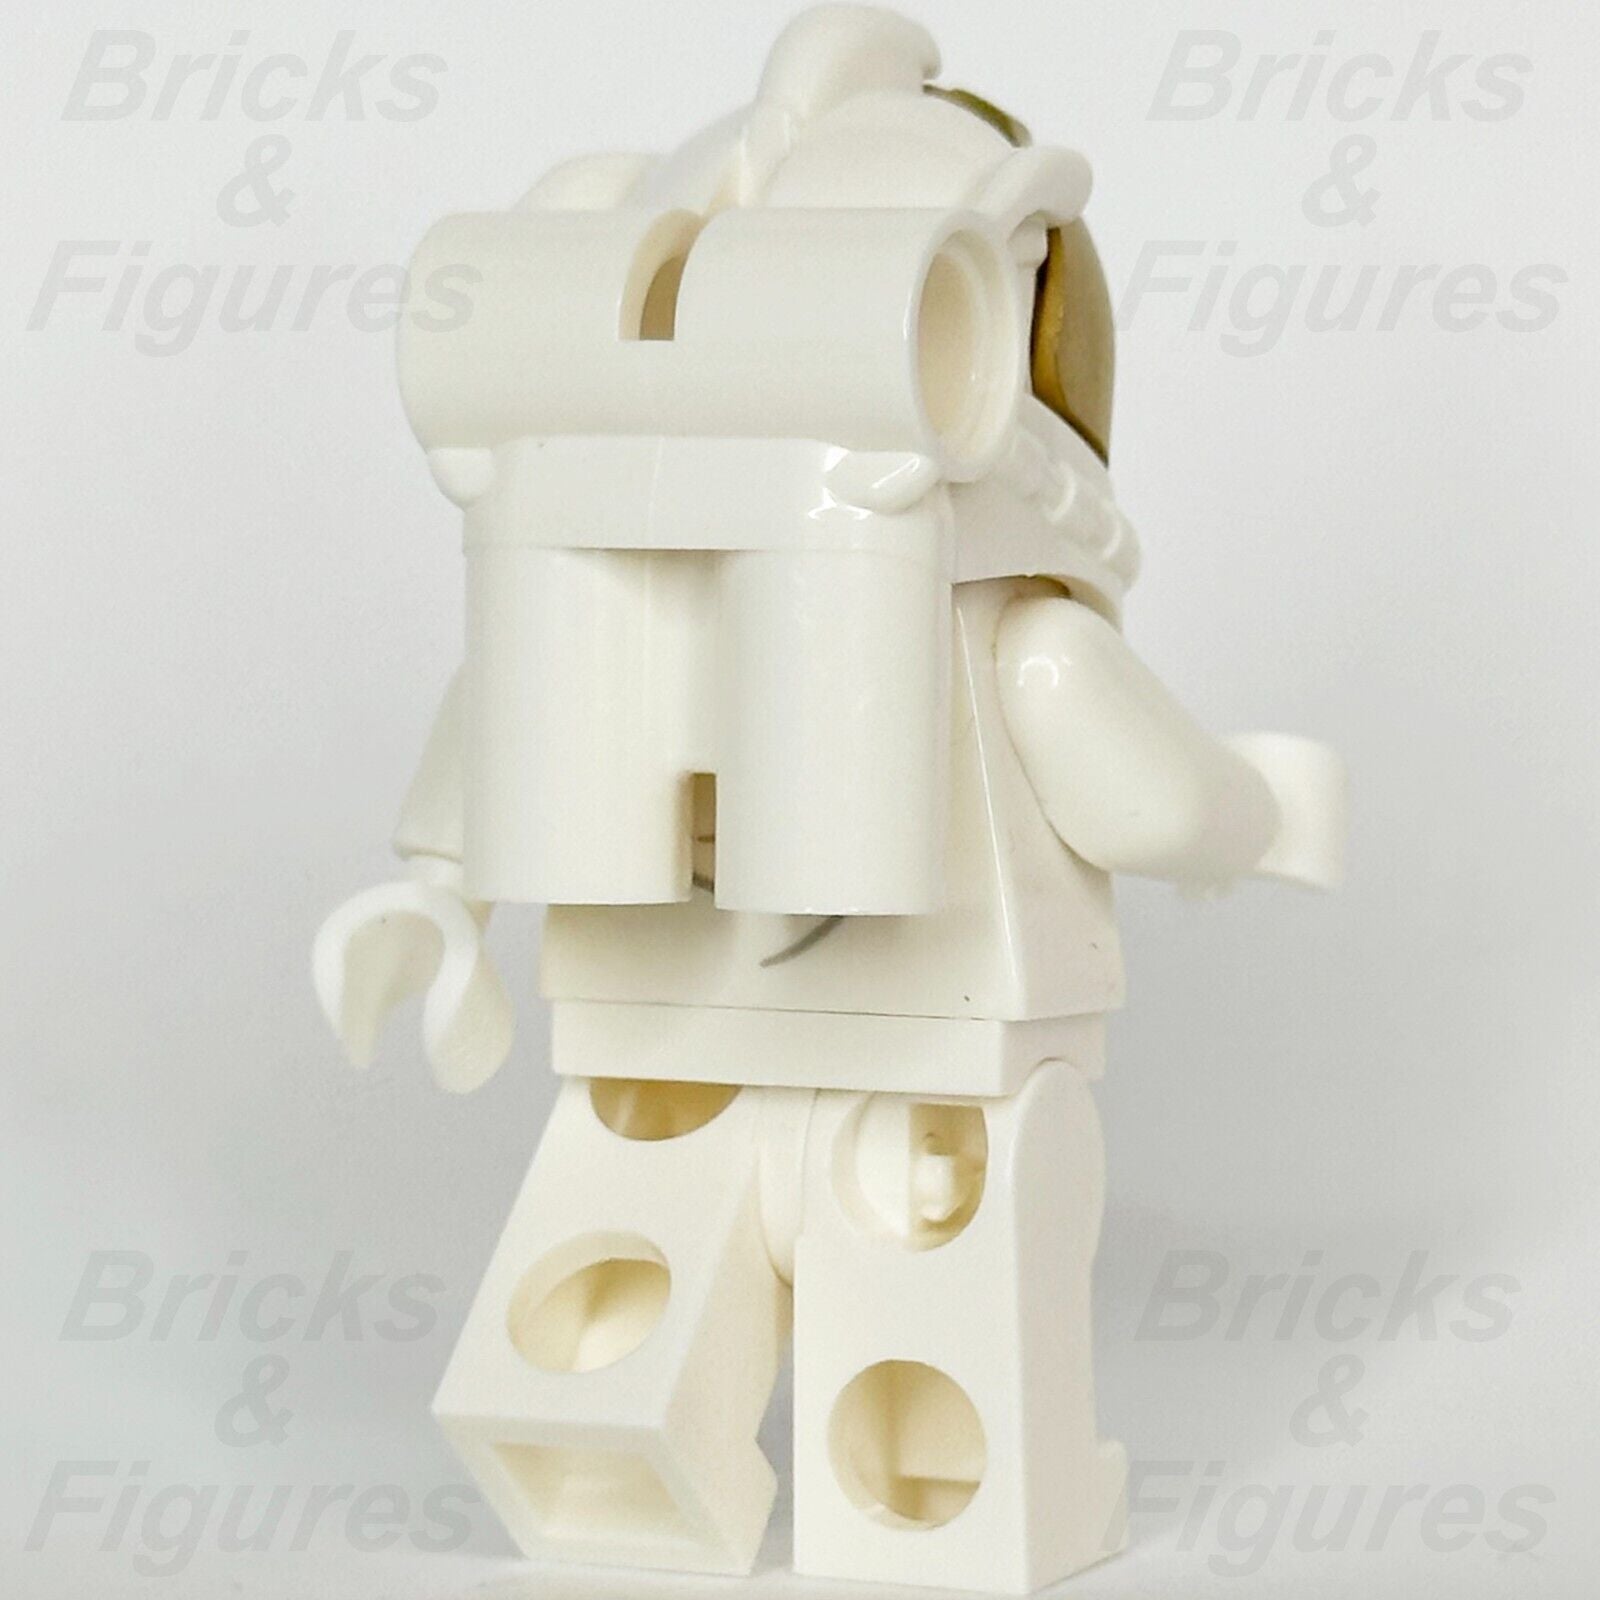 LEGO Creator NASA Apollo 11 Astronaut Minifigure Space Lopsided Smile 10266 - Bricks & Figures